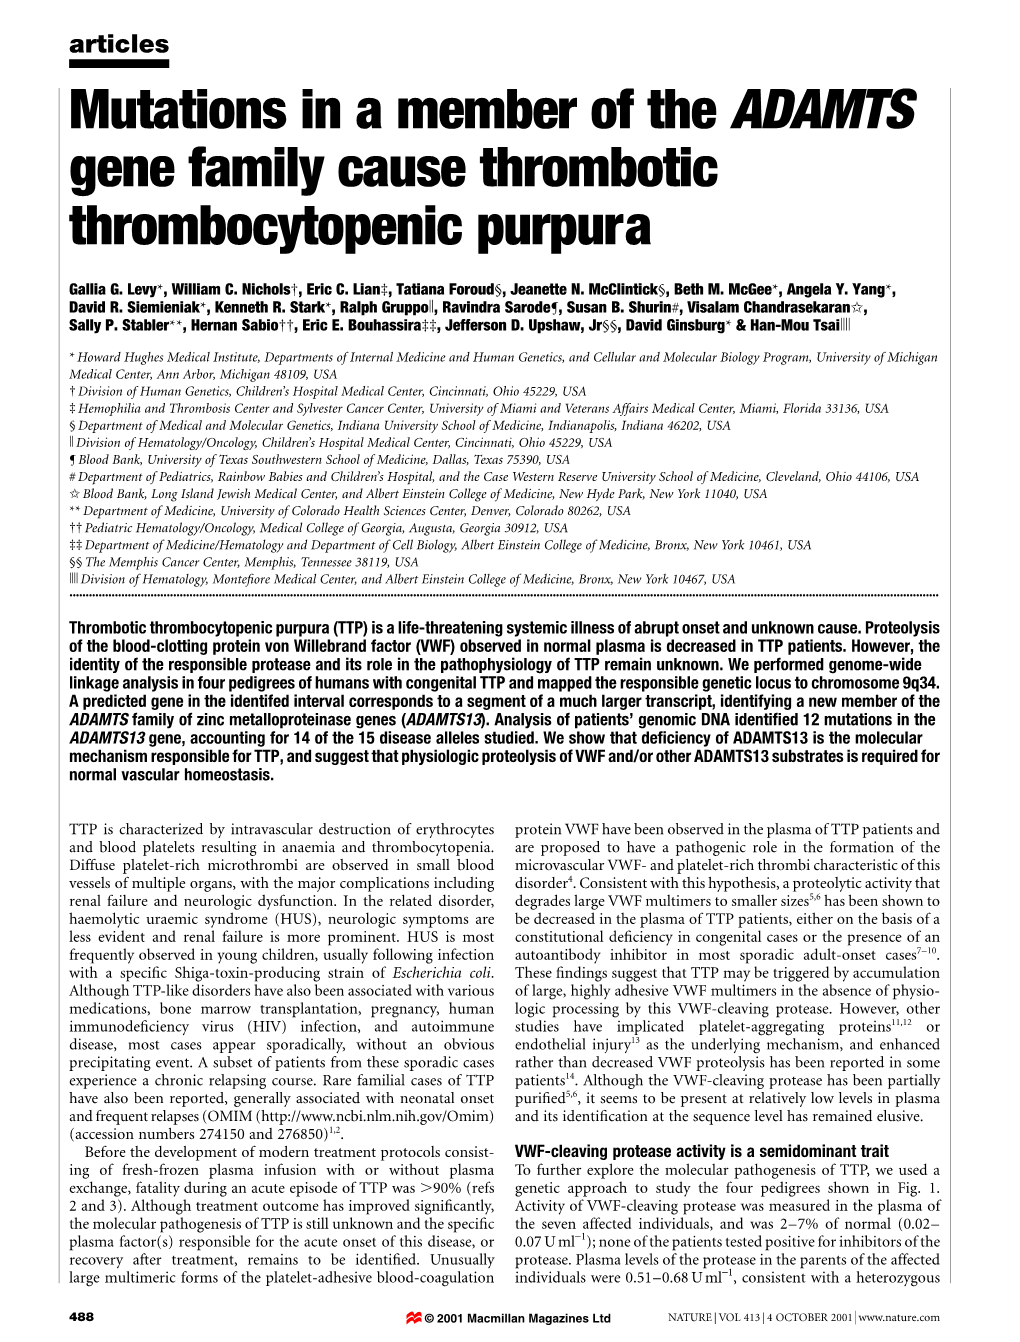 Mutations in a Member of the ADAMTS Gene Family Cause Thrombotic Thrombocytopenic Purpura